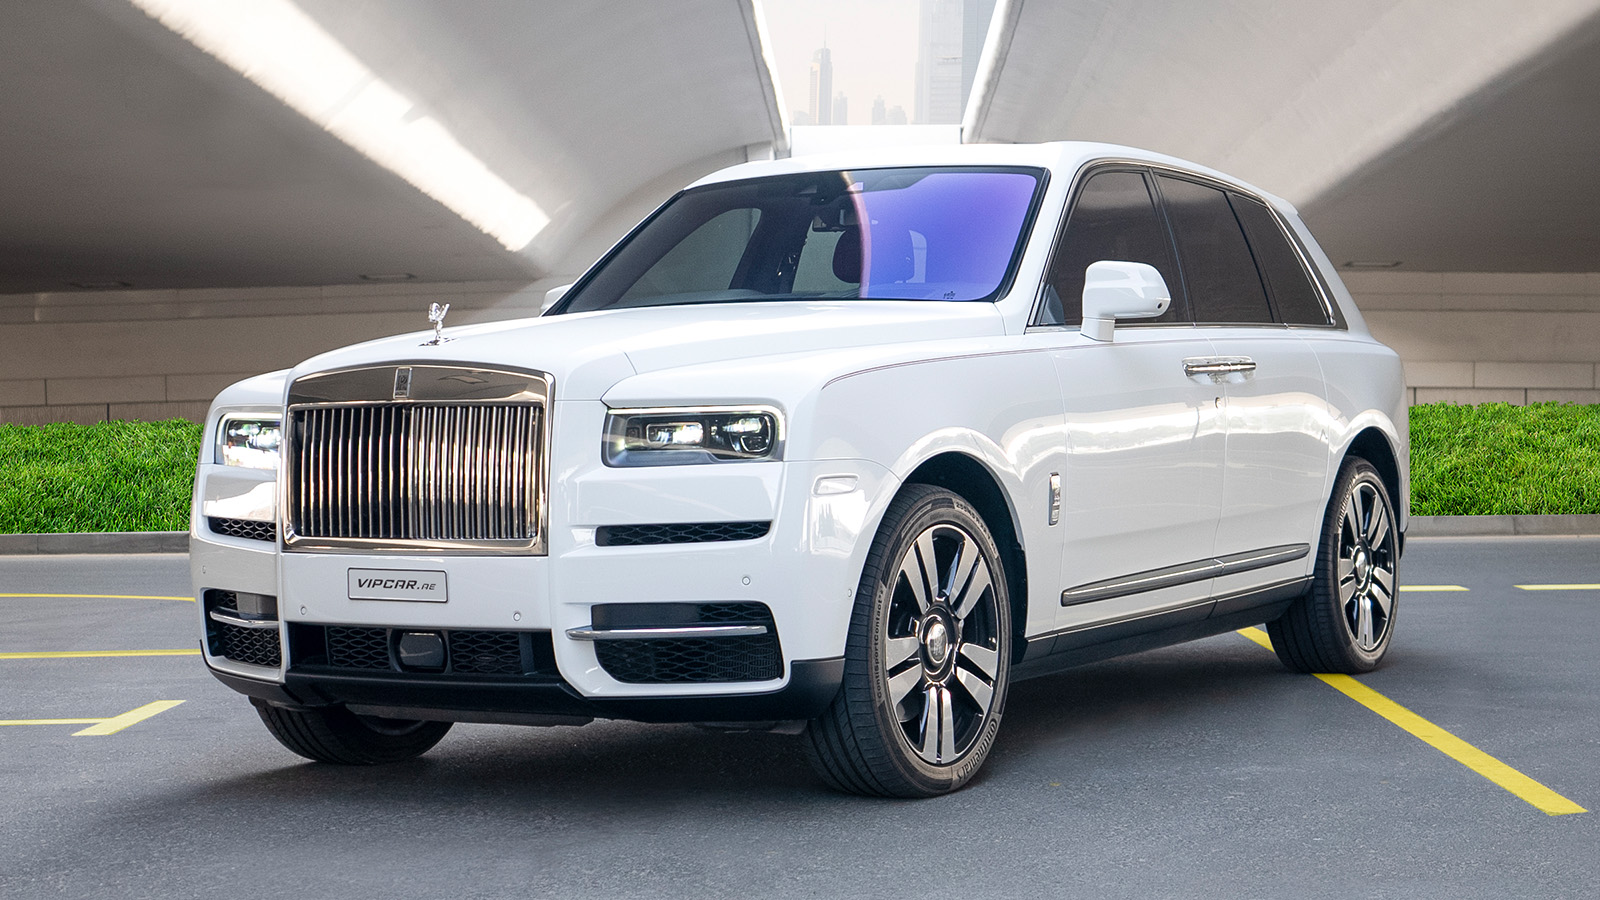 Luxury and Sports Car Rental in Dubai – VIP Rent a Car